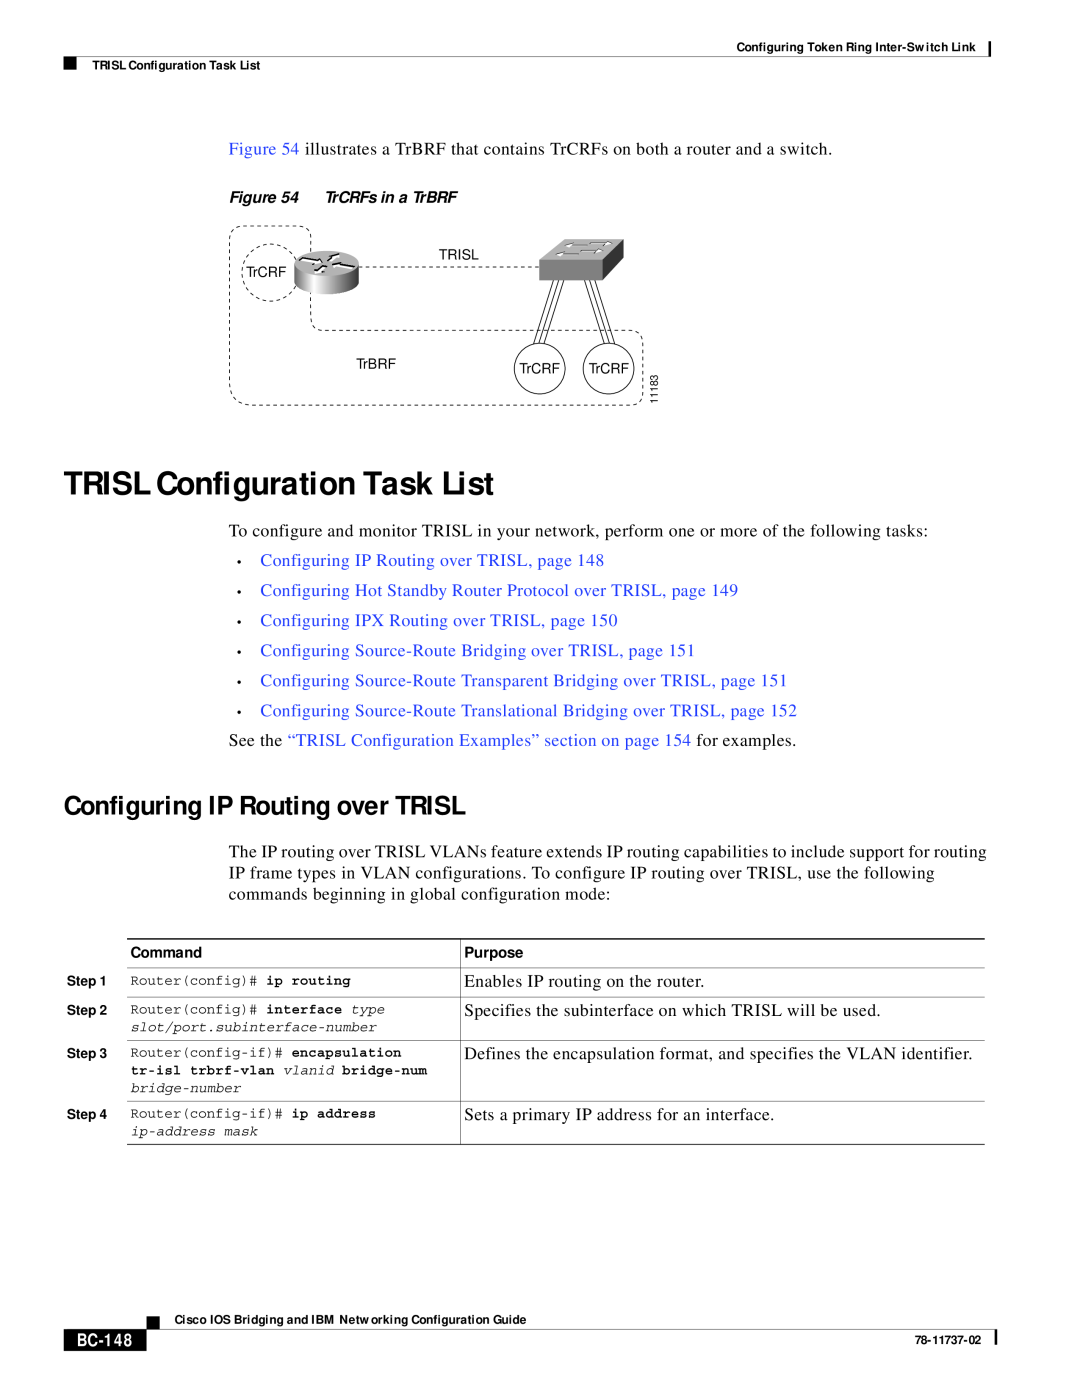 Cisco Systems BC-145 manual TRISL Configuration Task List, Configuring IP Routing over TRISL, Command, Purpose, BC-148 